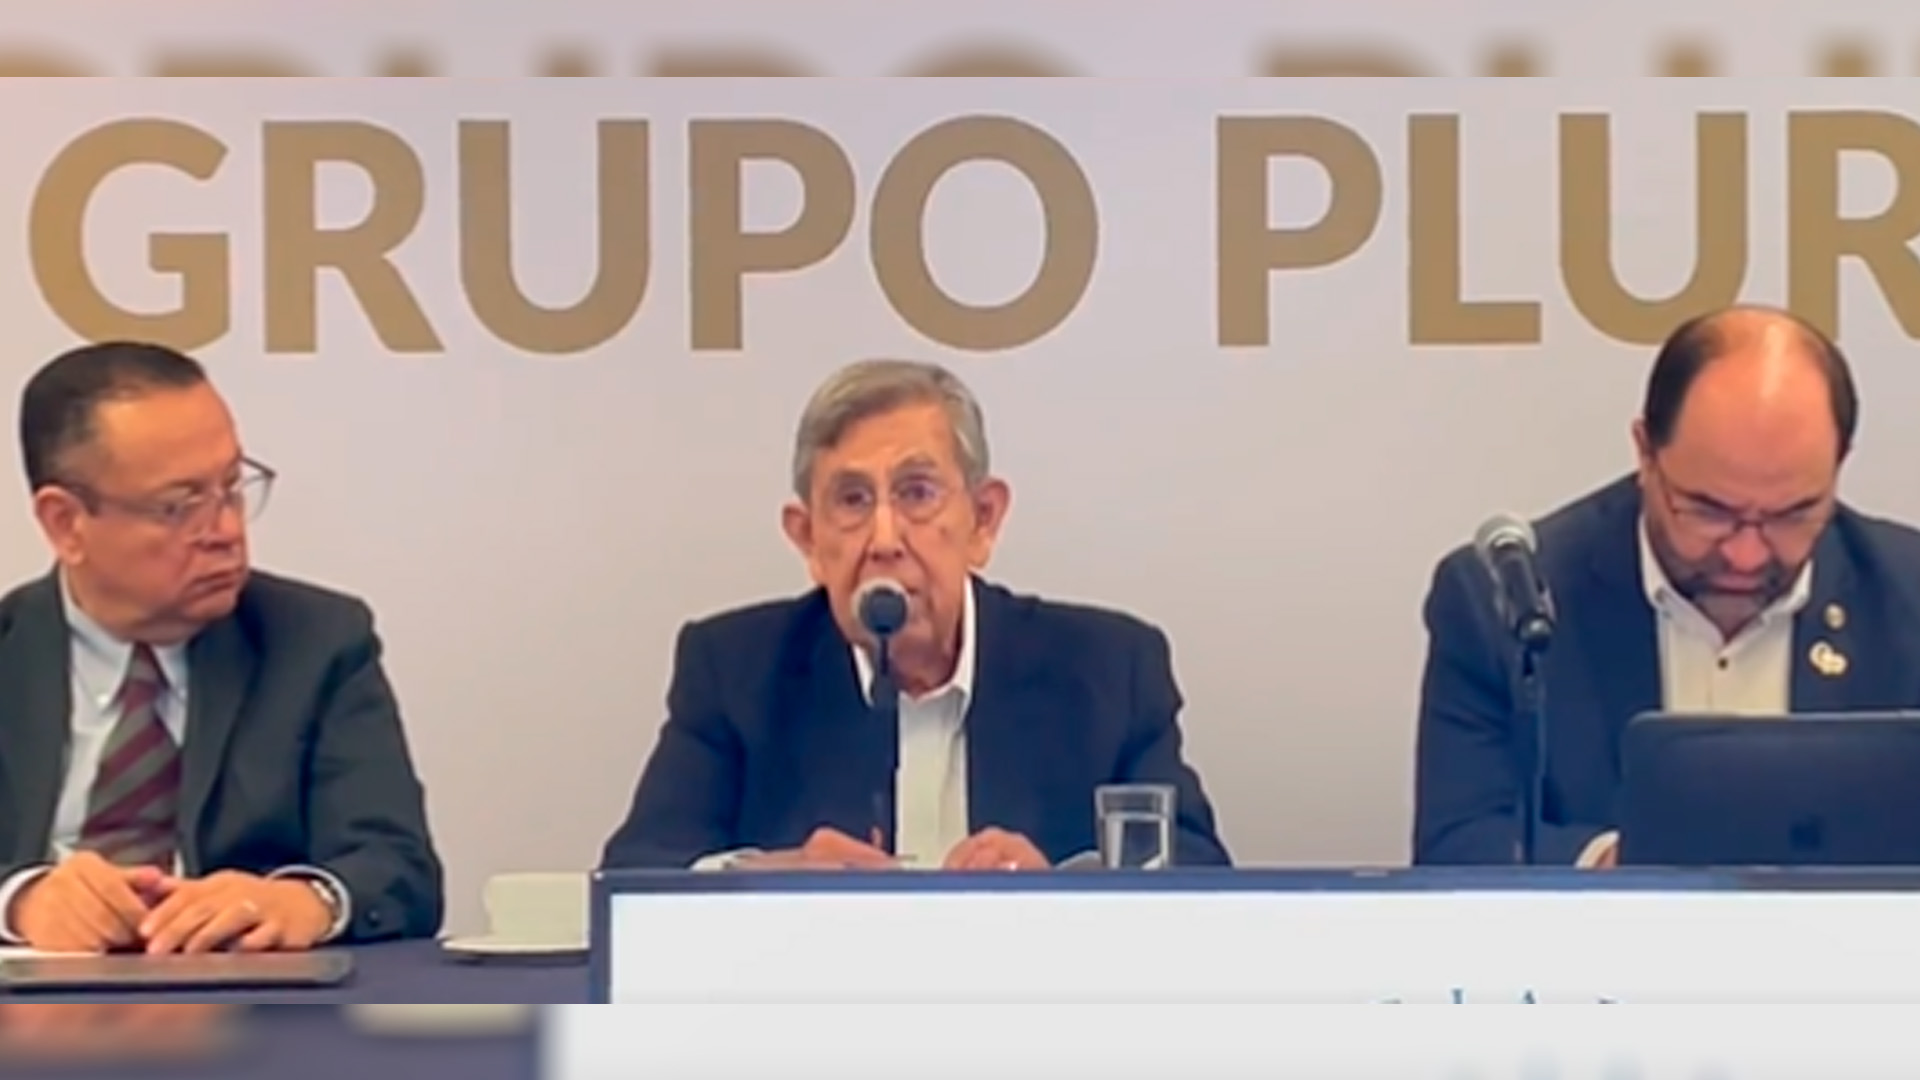 Cuauhtémoc Cárdenas cuestionó a los partidos políticos en el país (Foto: Captura de pantalla Twitter/@letroblesrosa)